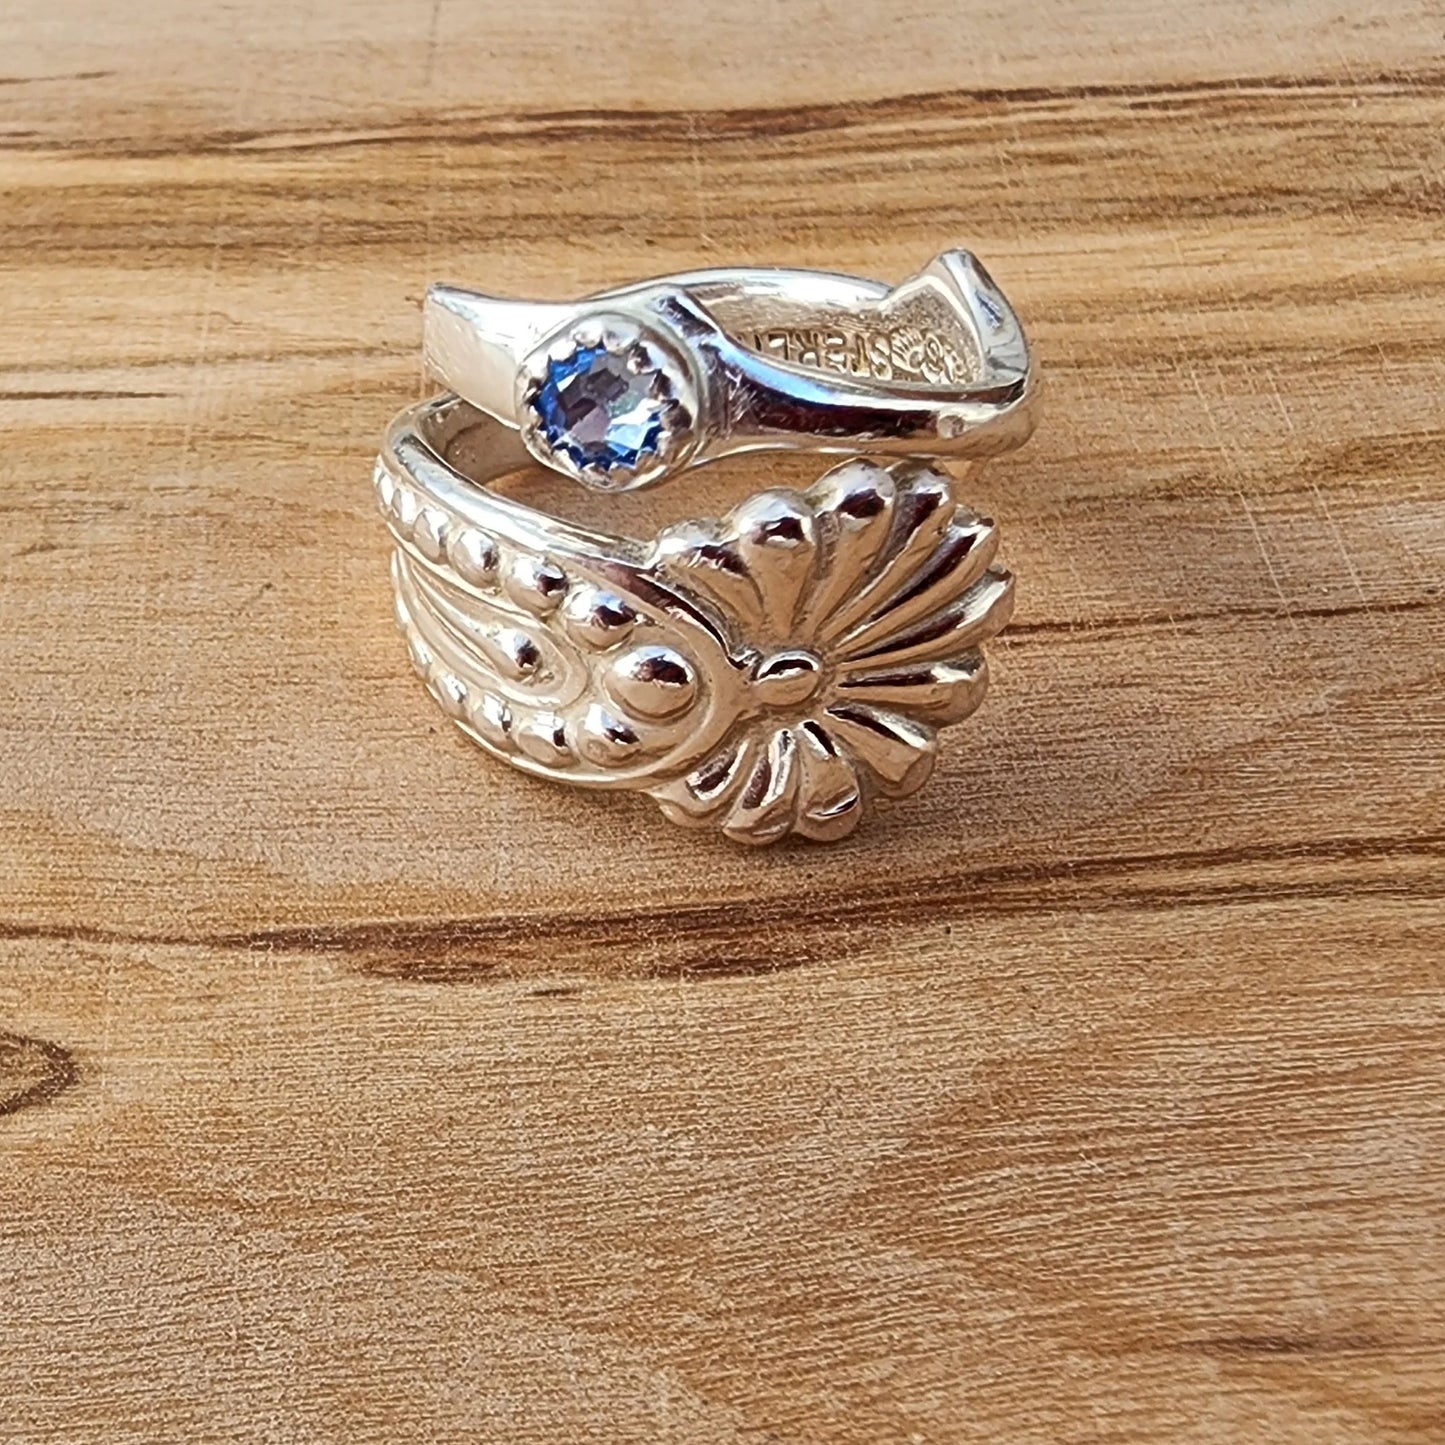 Vintage Spoon Ring With Aqua Swarovski Rhinestone